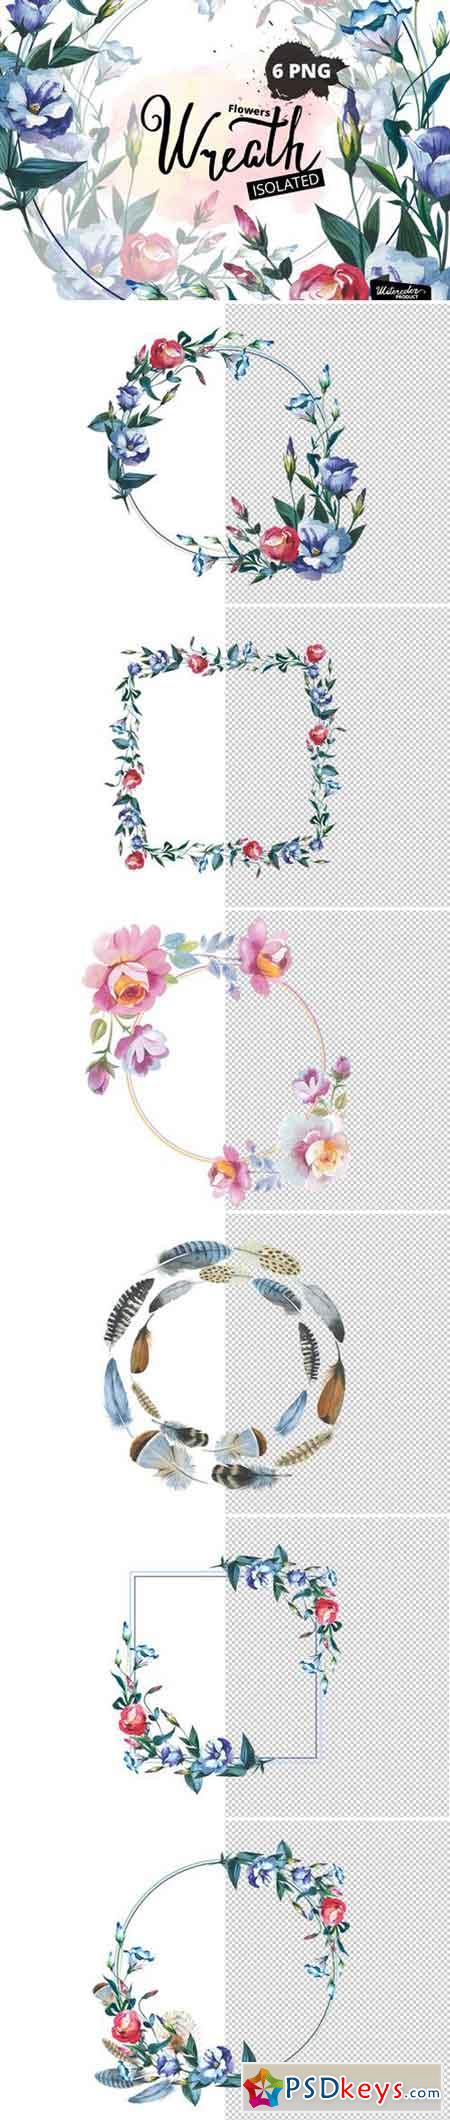 Watercolor Flower Wreath PNG set